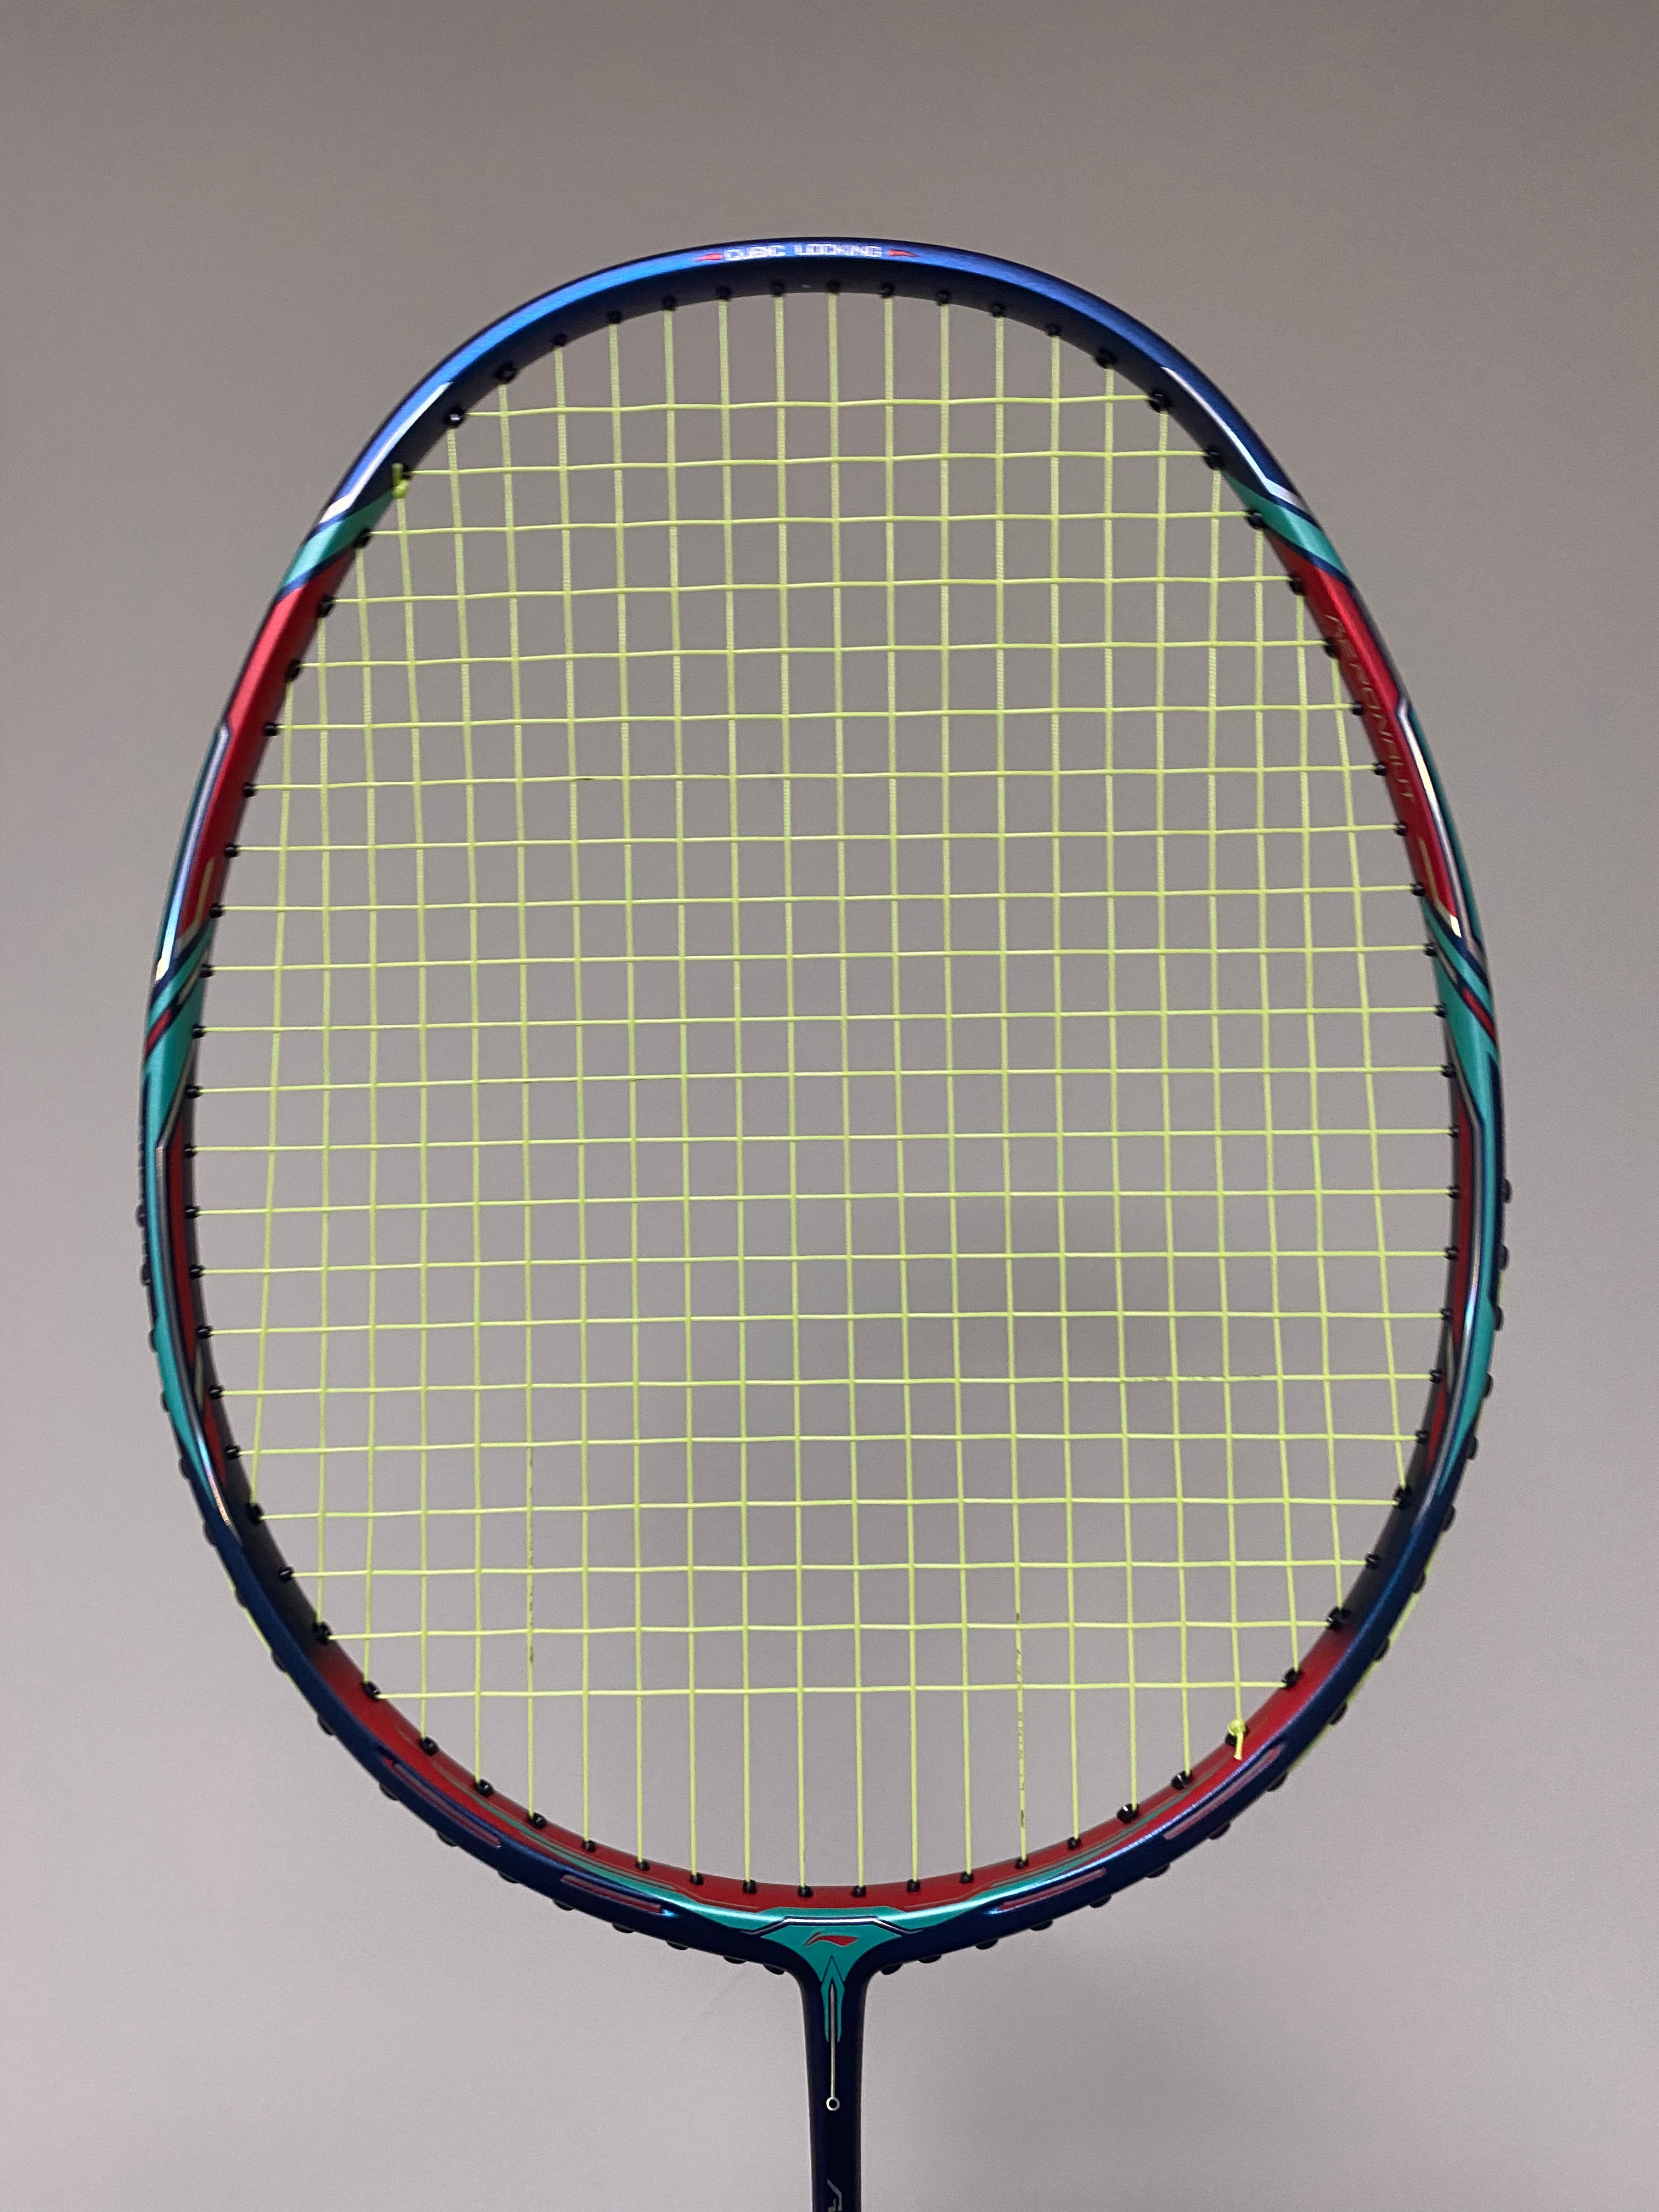 Li-Ning Aeronaut 9000 Combat Badminton Racket | badminton